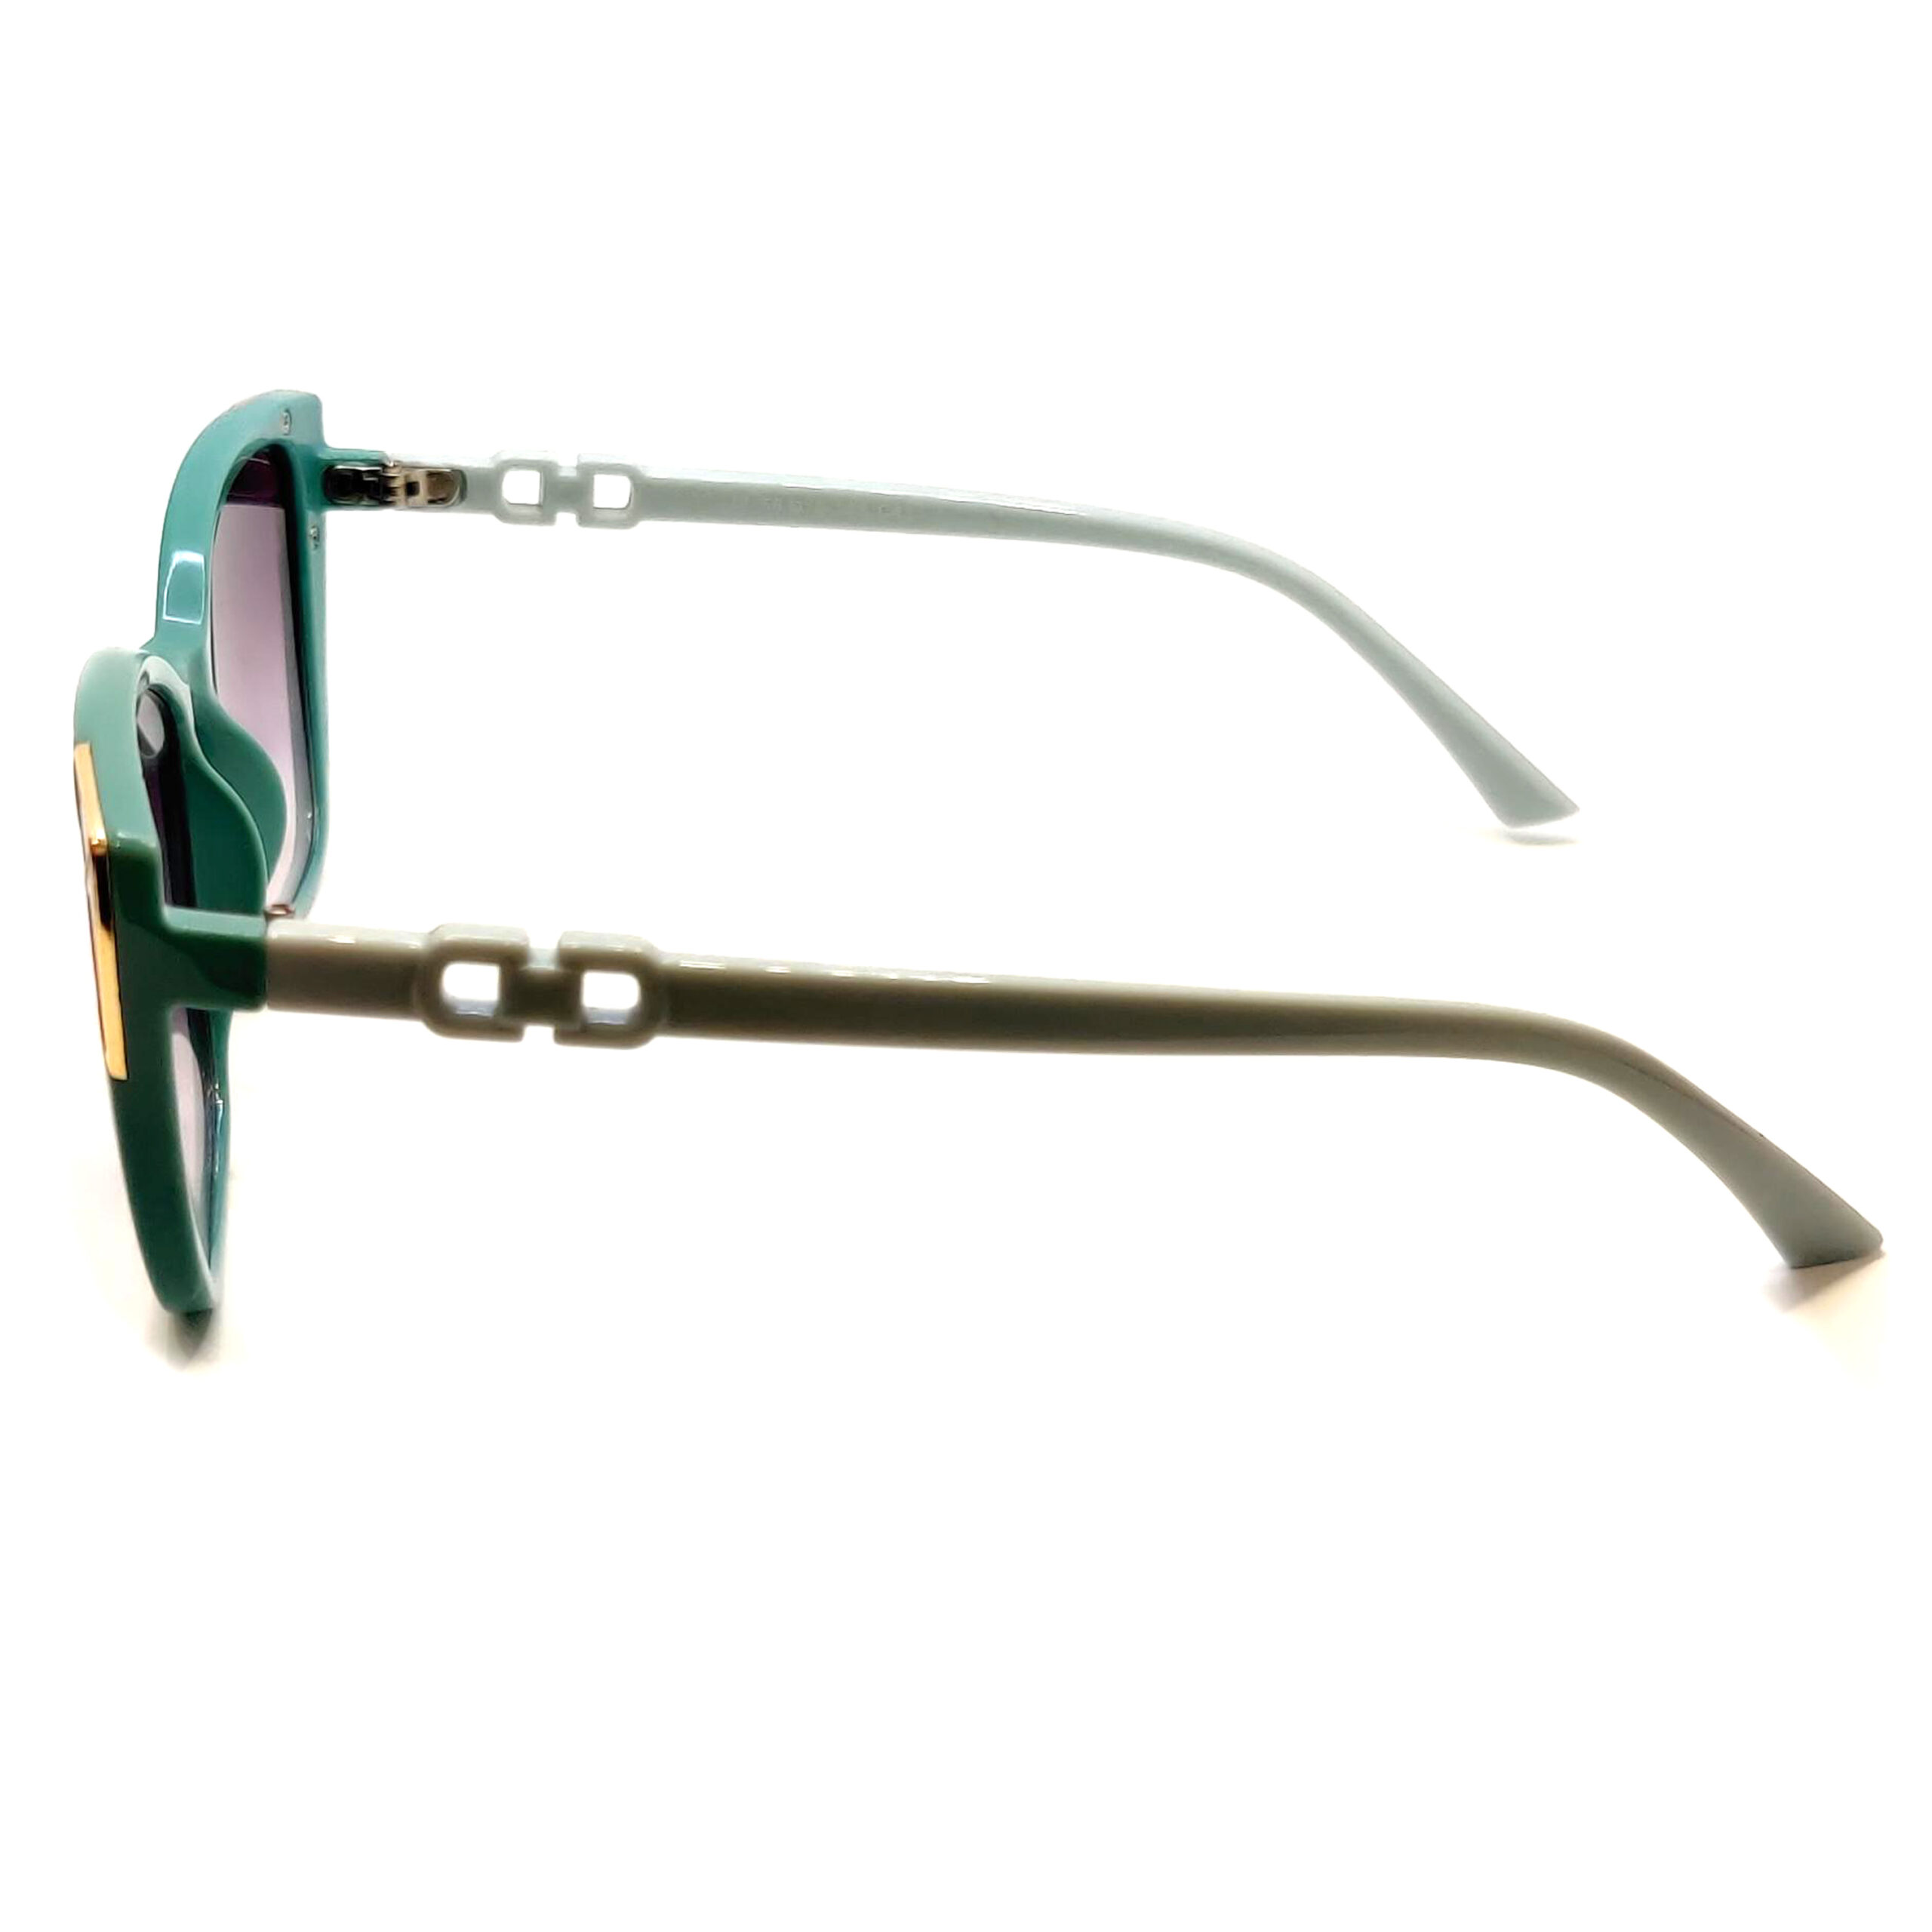 buy sunglasses online at chashmah.com